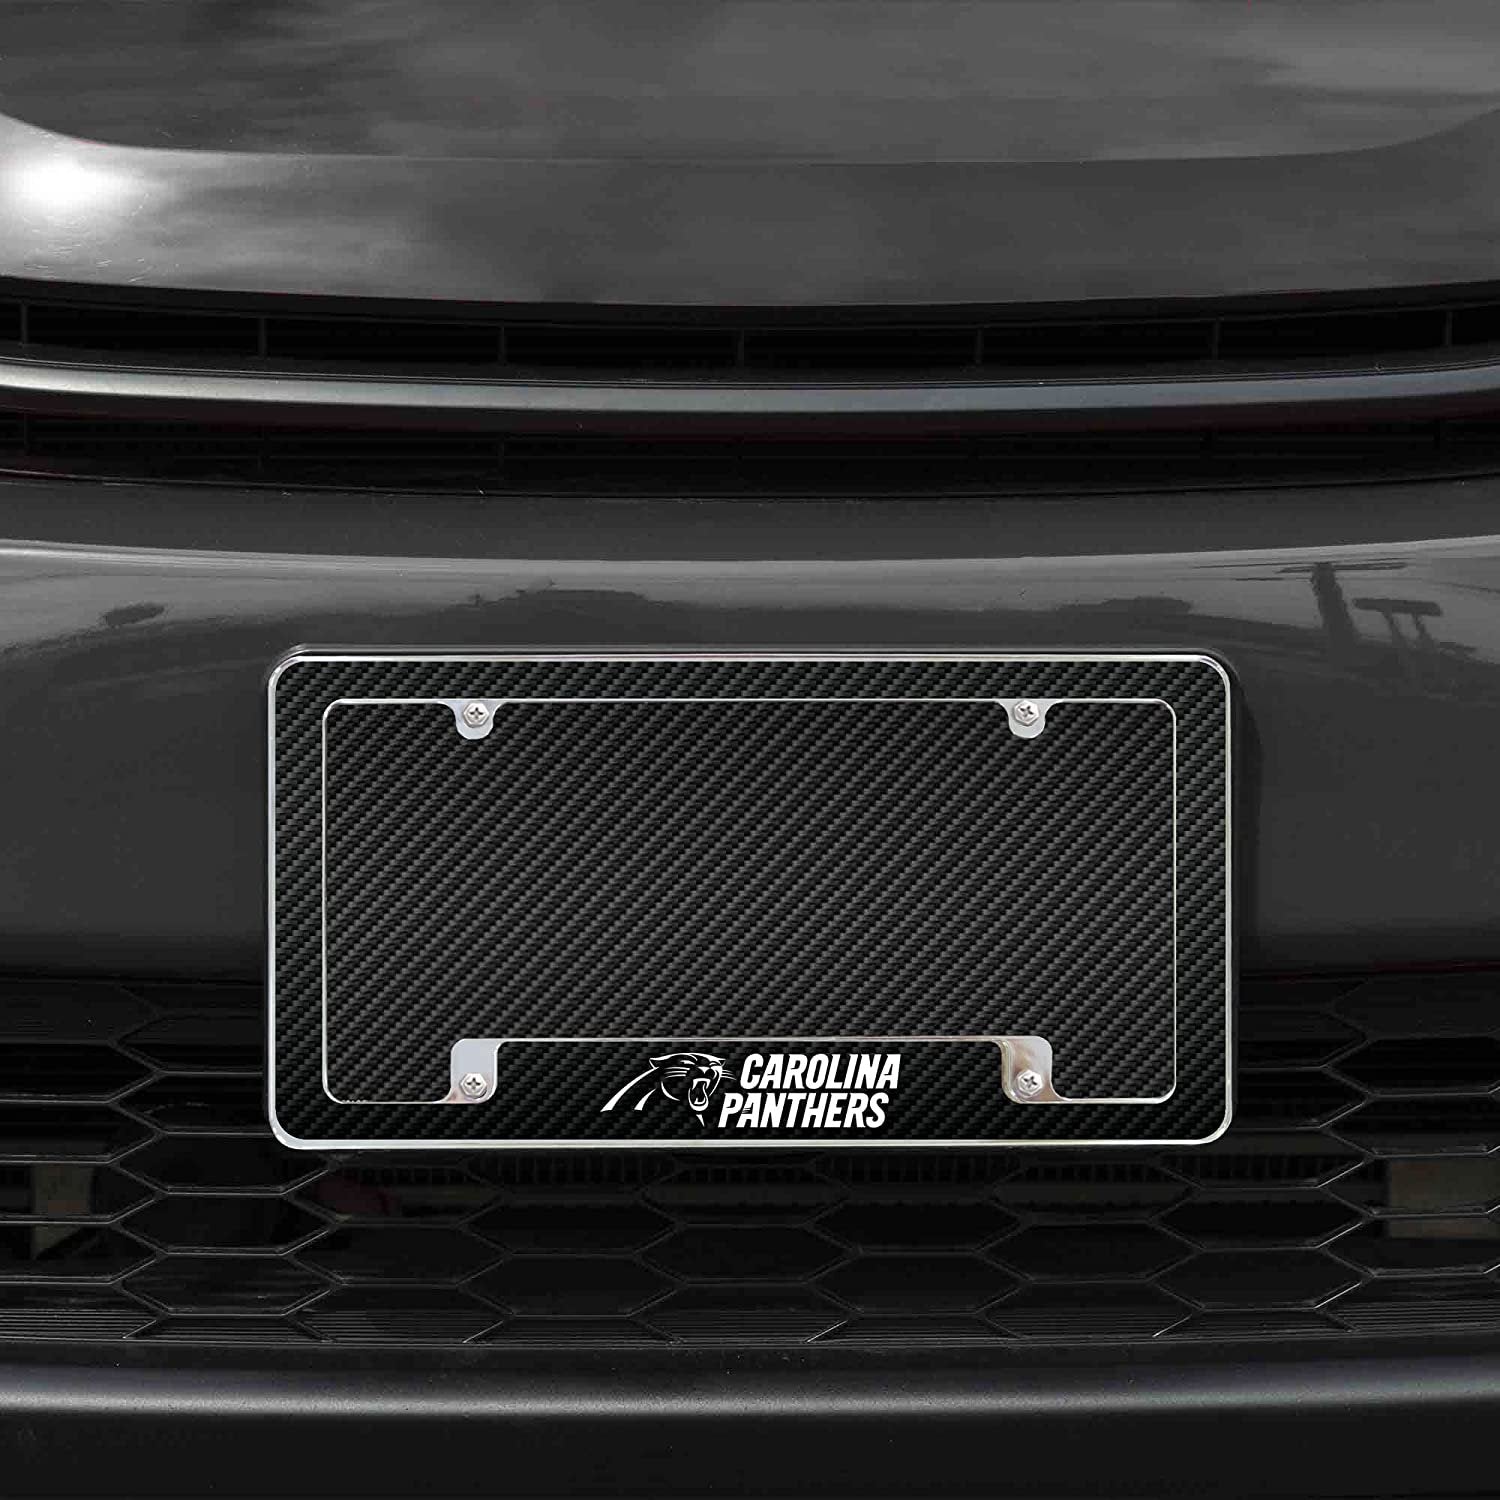 Carolina Panthers Metal License Plate Frame Chrome Tag Cover Carbon Fiber Design 6x12 Inch